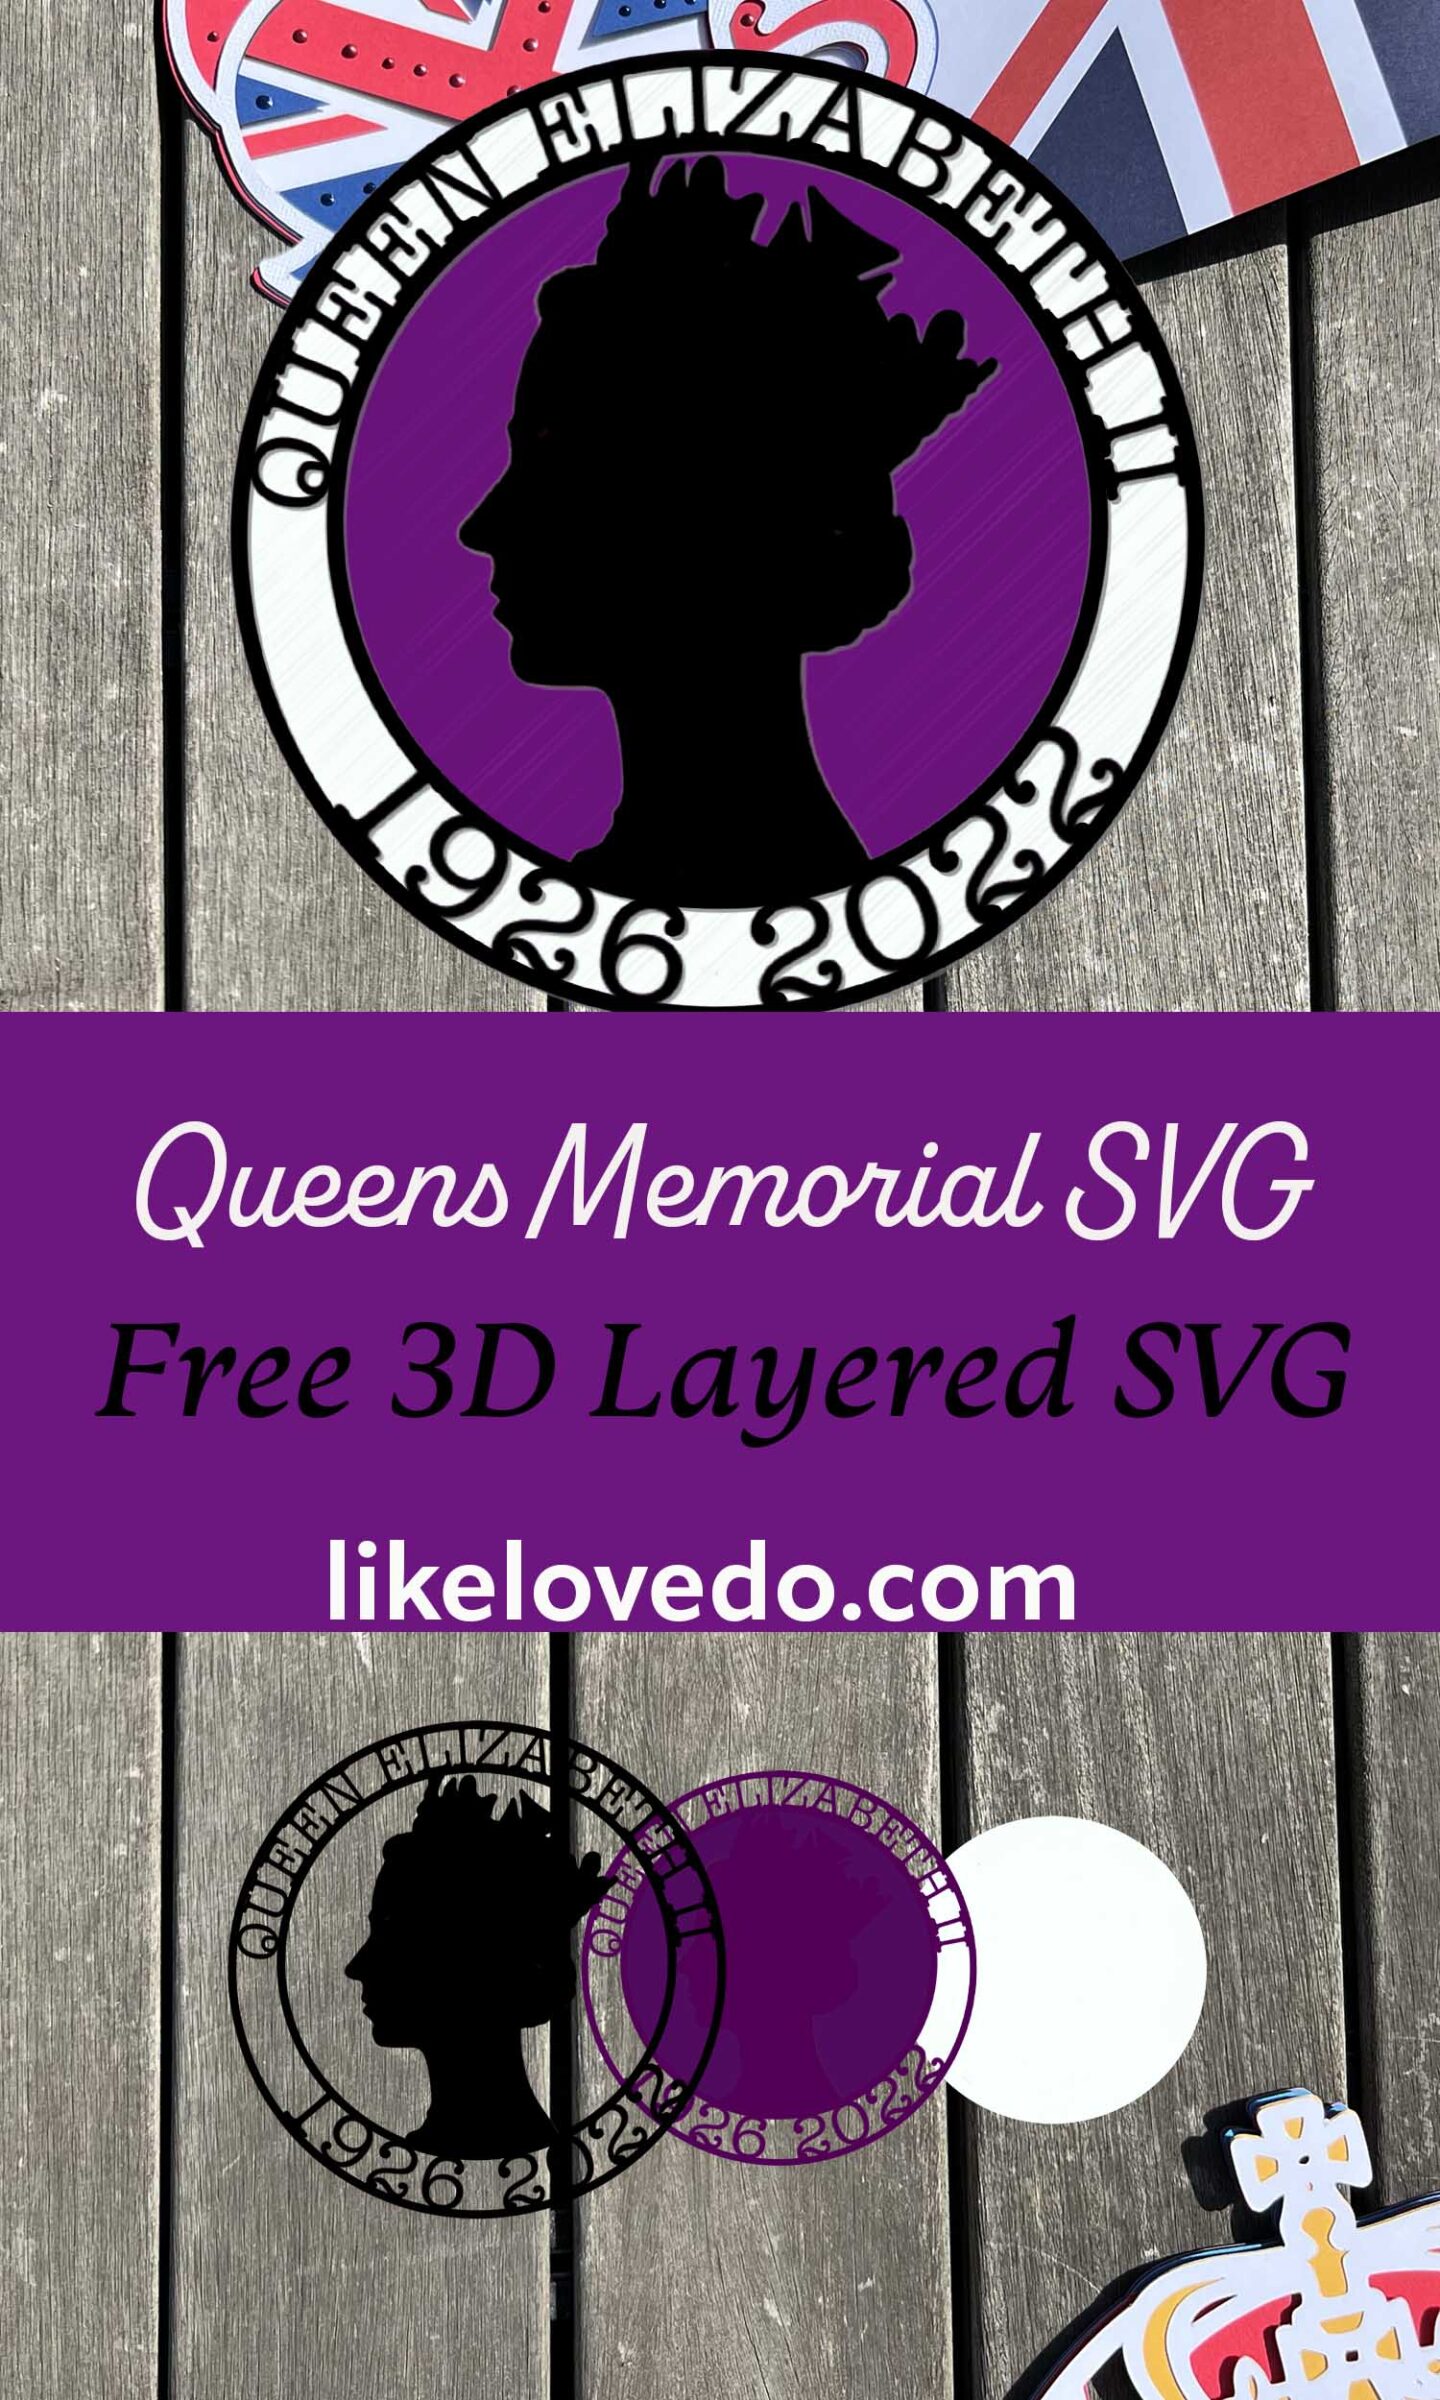 Free layered Queen Elizabeth Memorial SVG